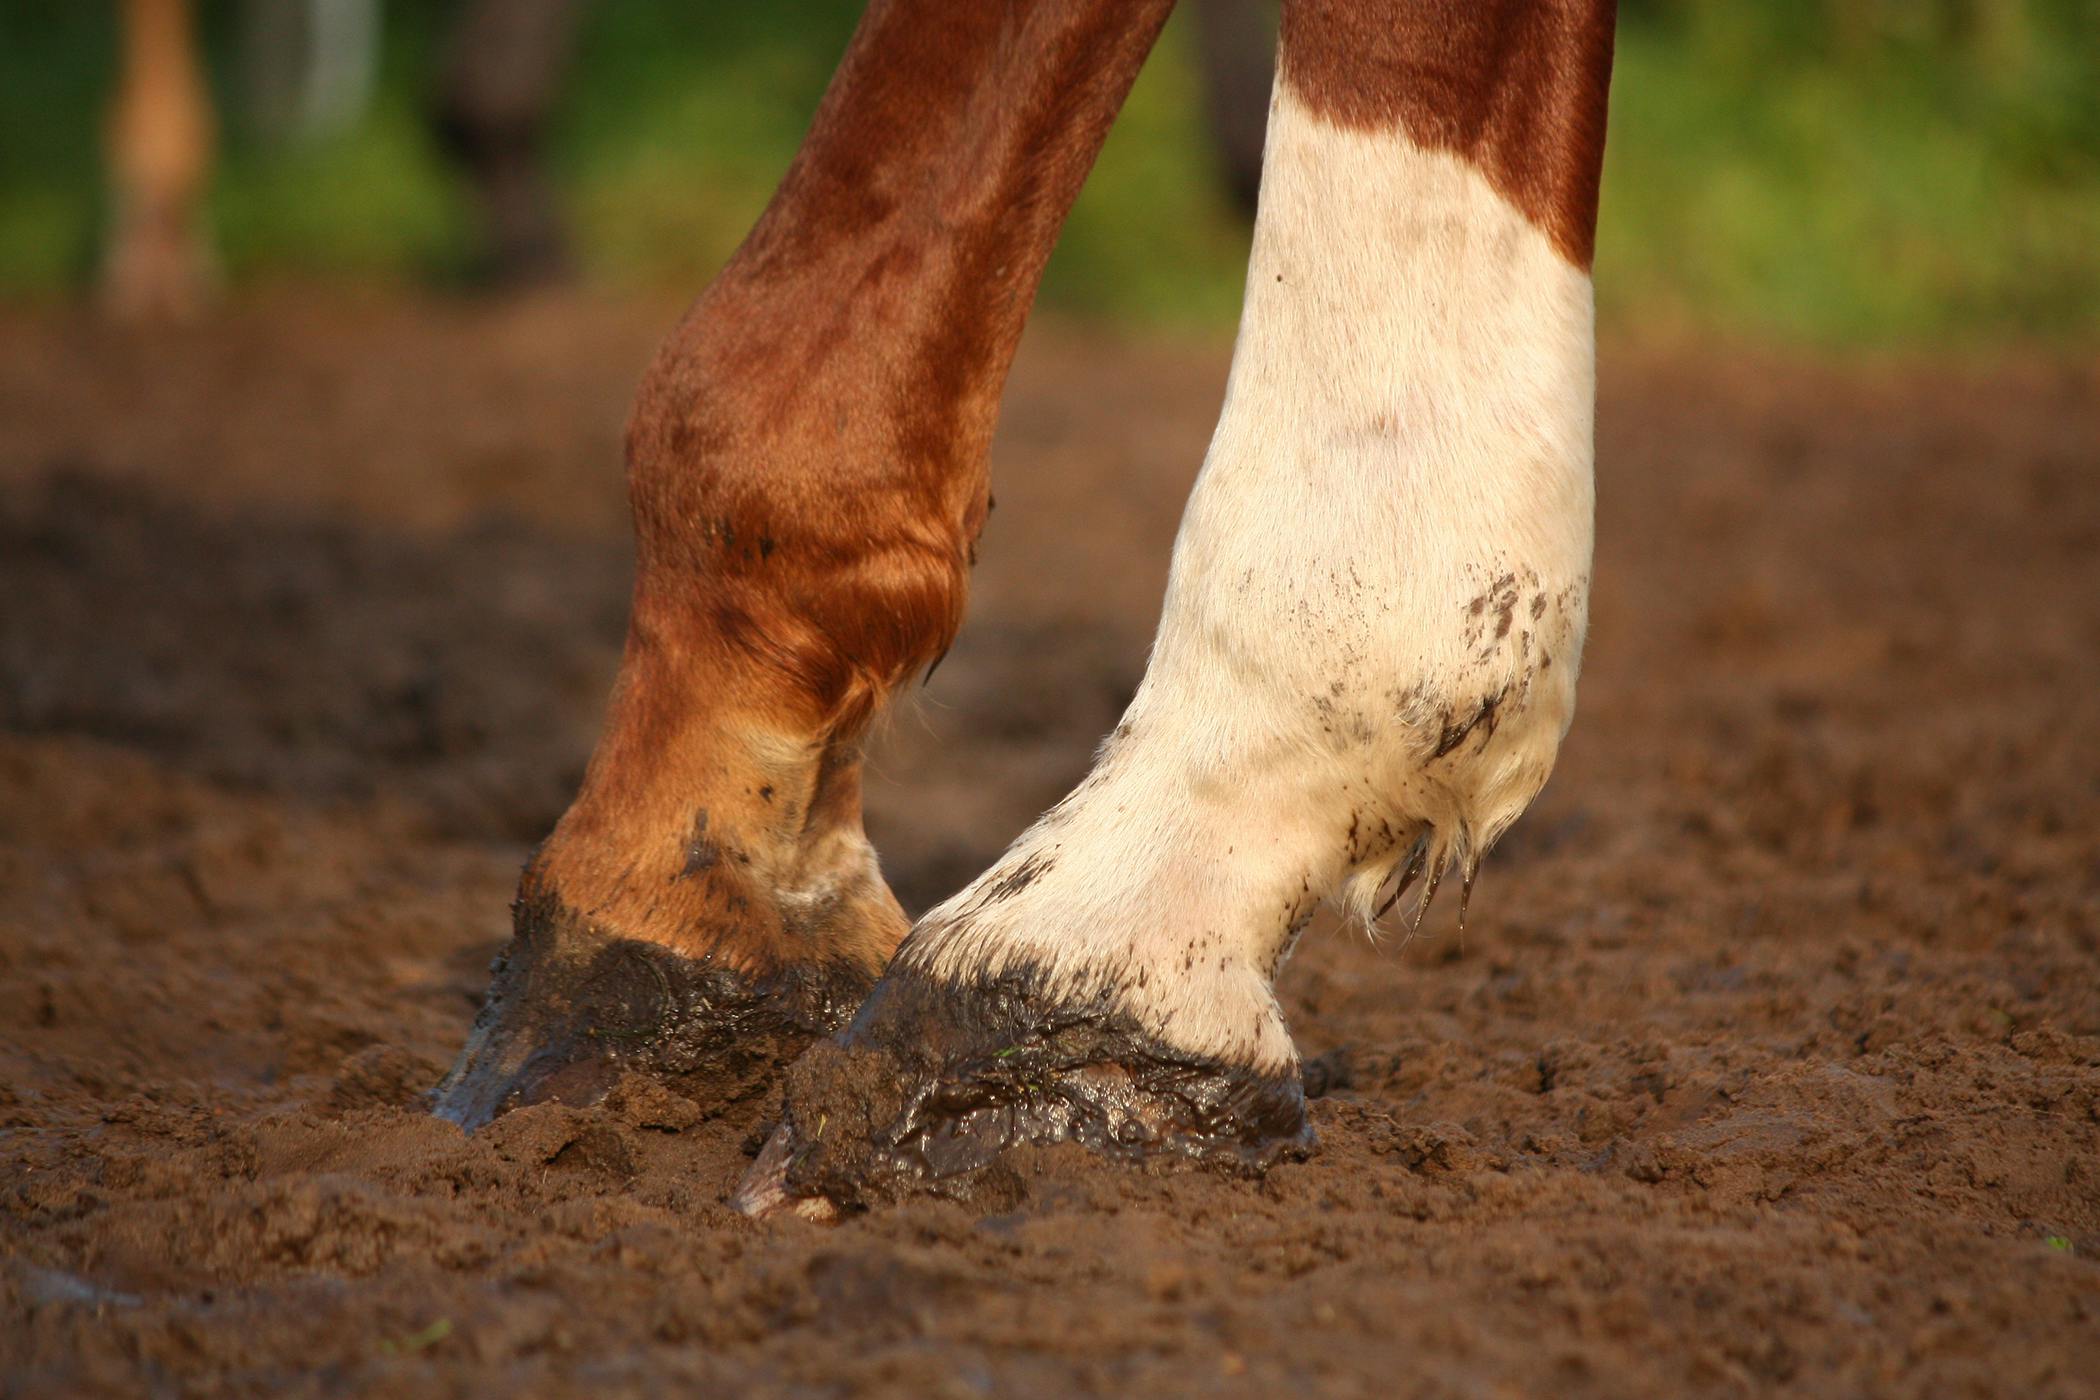 leg injuries in horses